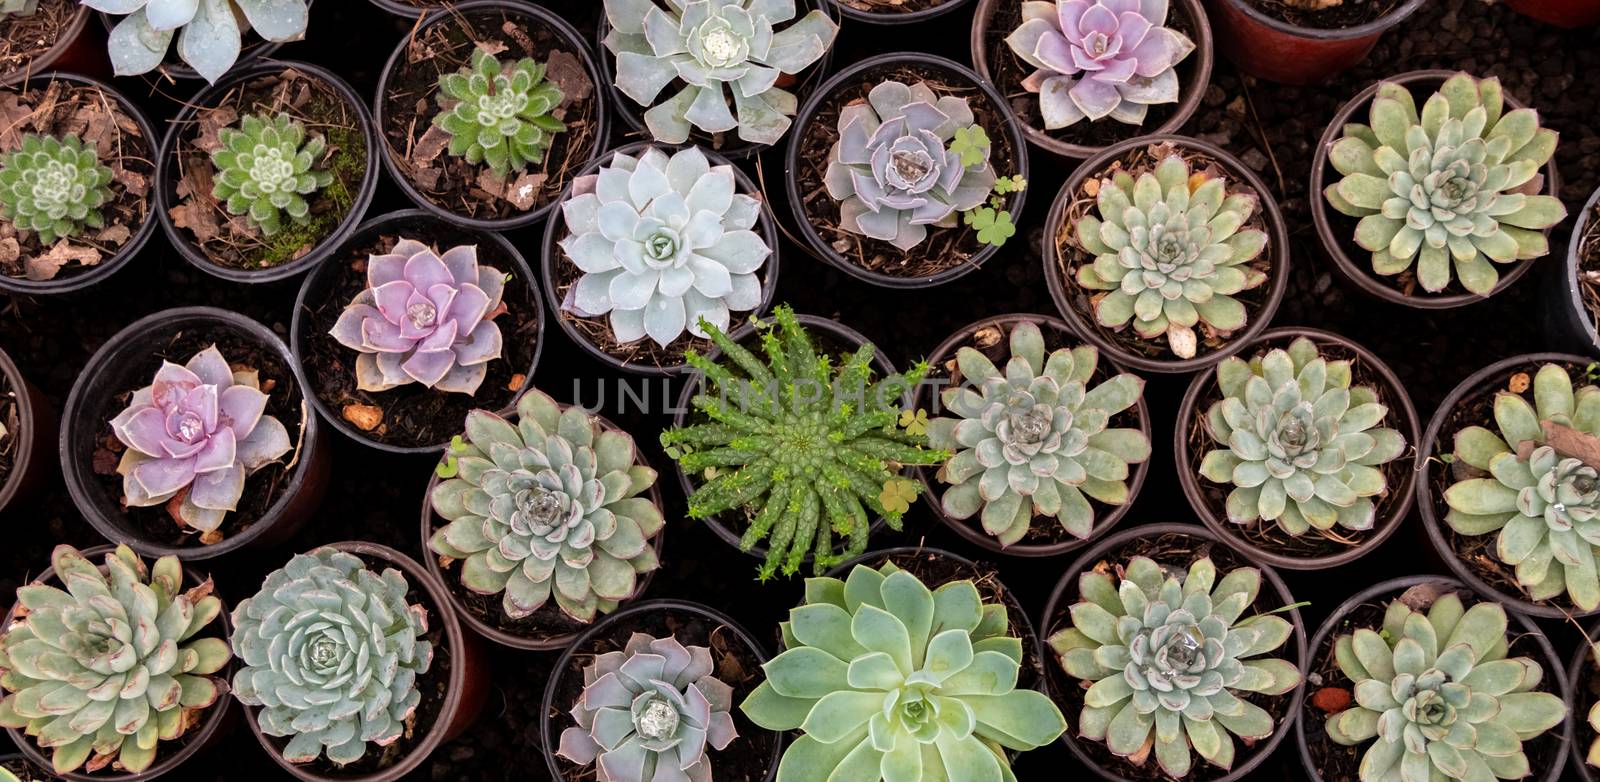 Variety of cactus plants, succulents arranged harmoniously by leo_de_la_garza